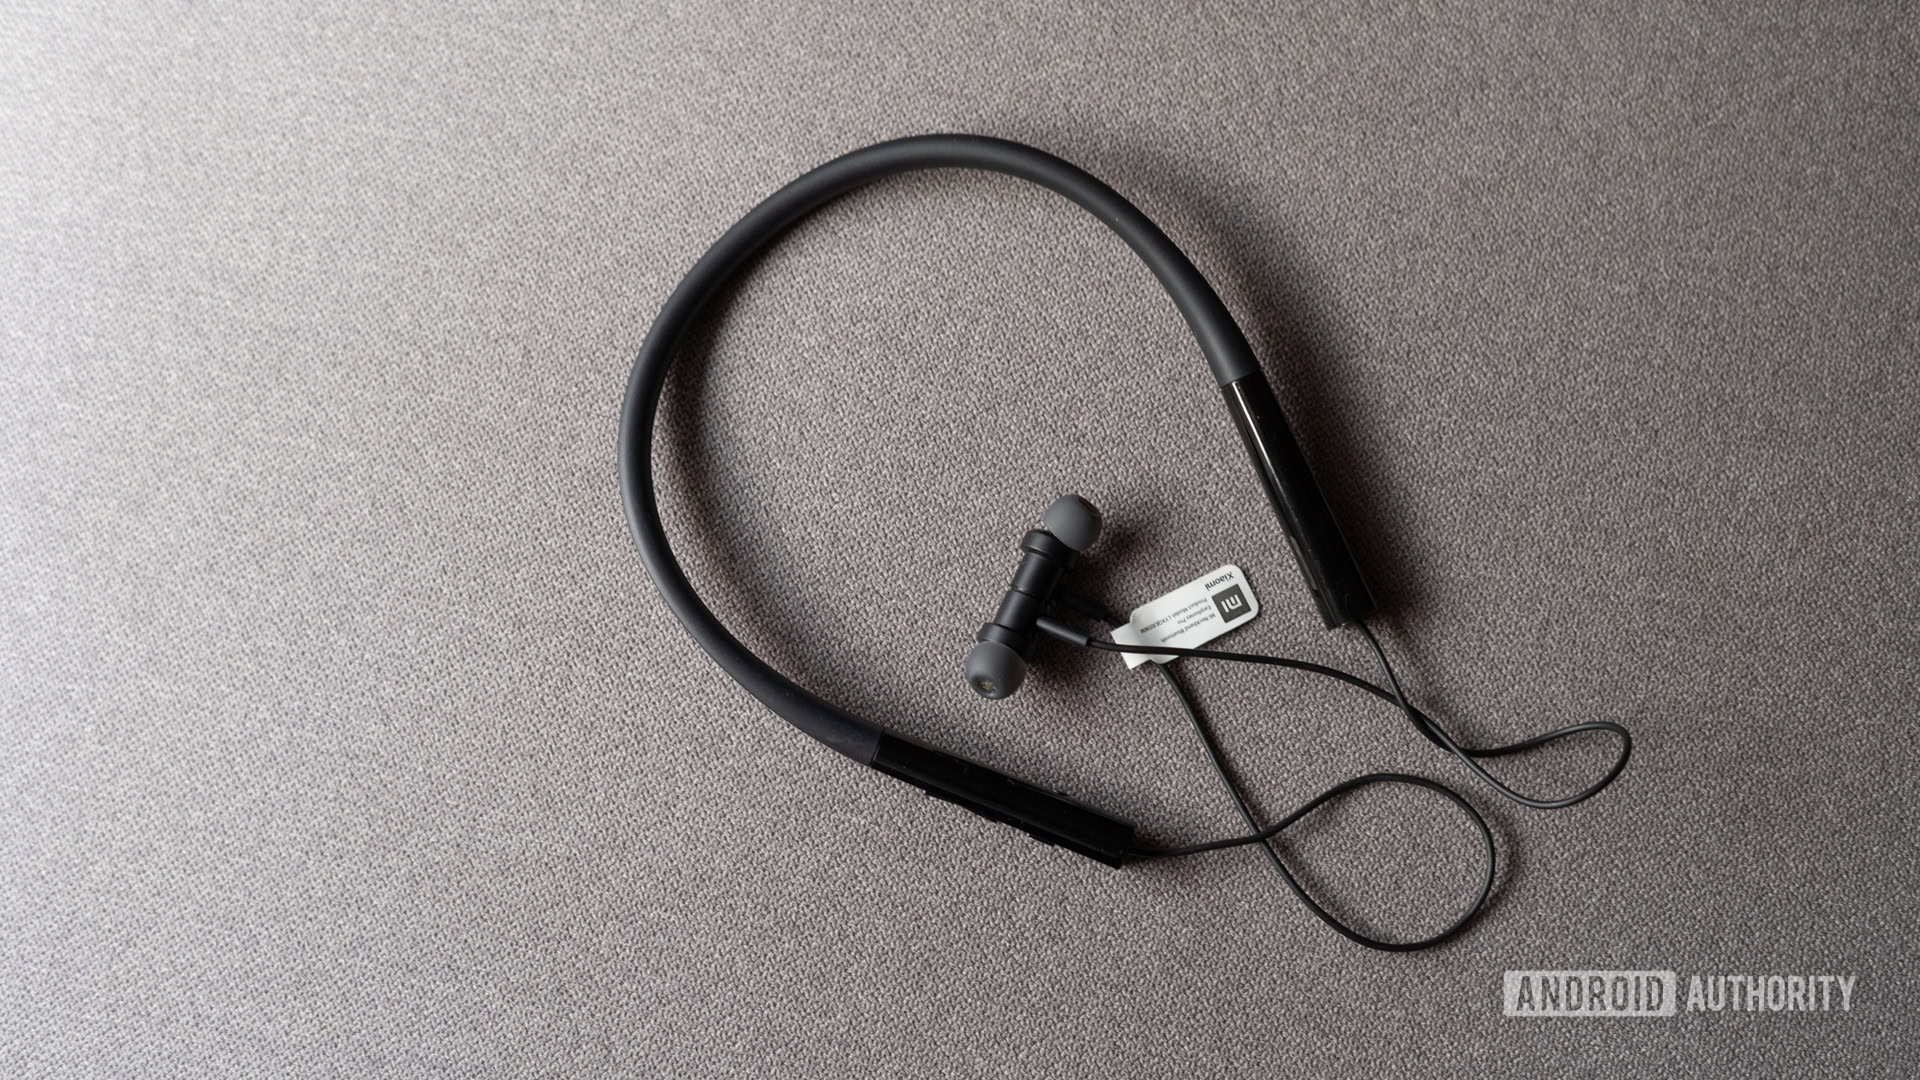 Mi Neckband Bluetooth Earphones review lead image